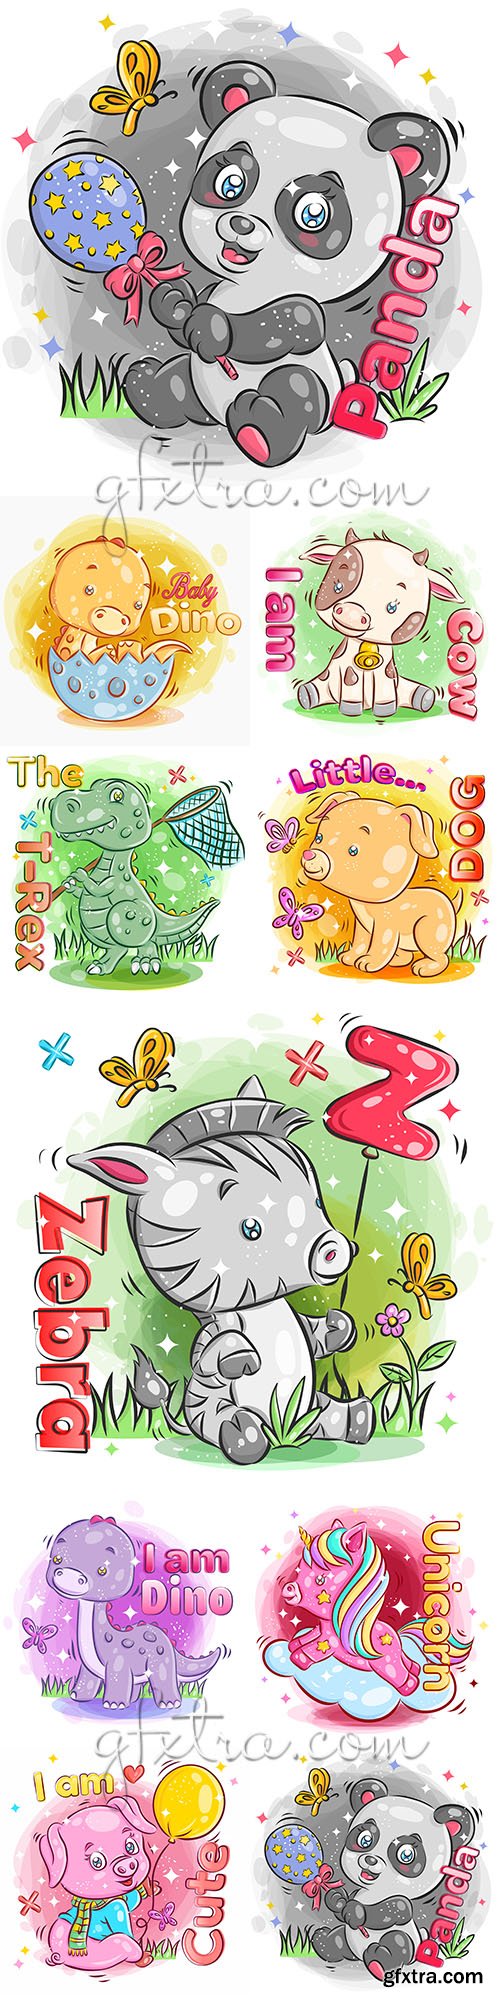 Cute animals colorful decorative cartoon illustration 2